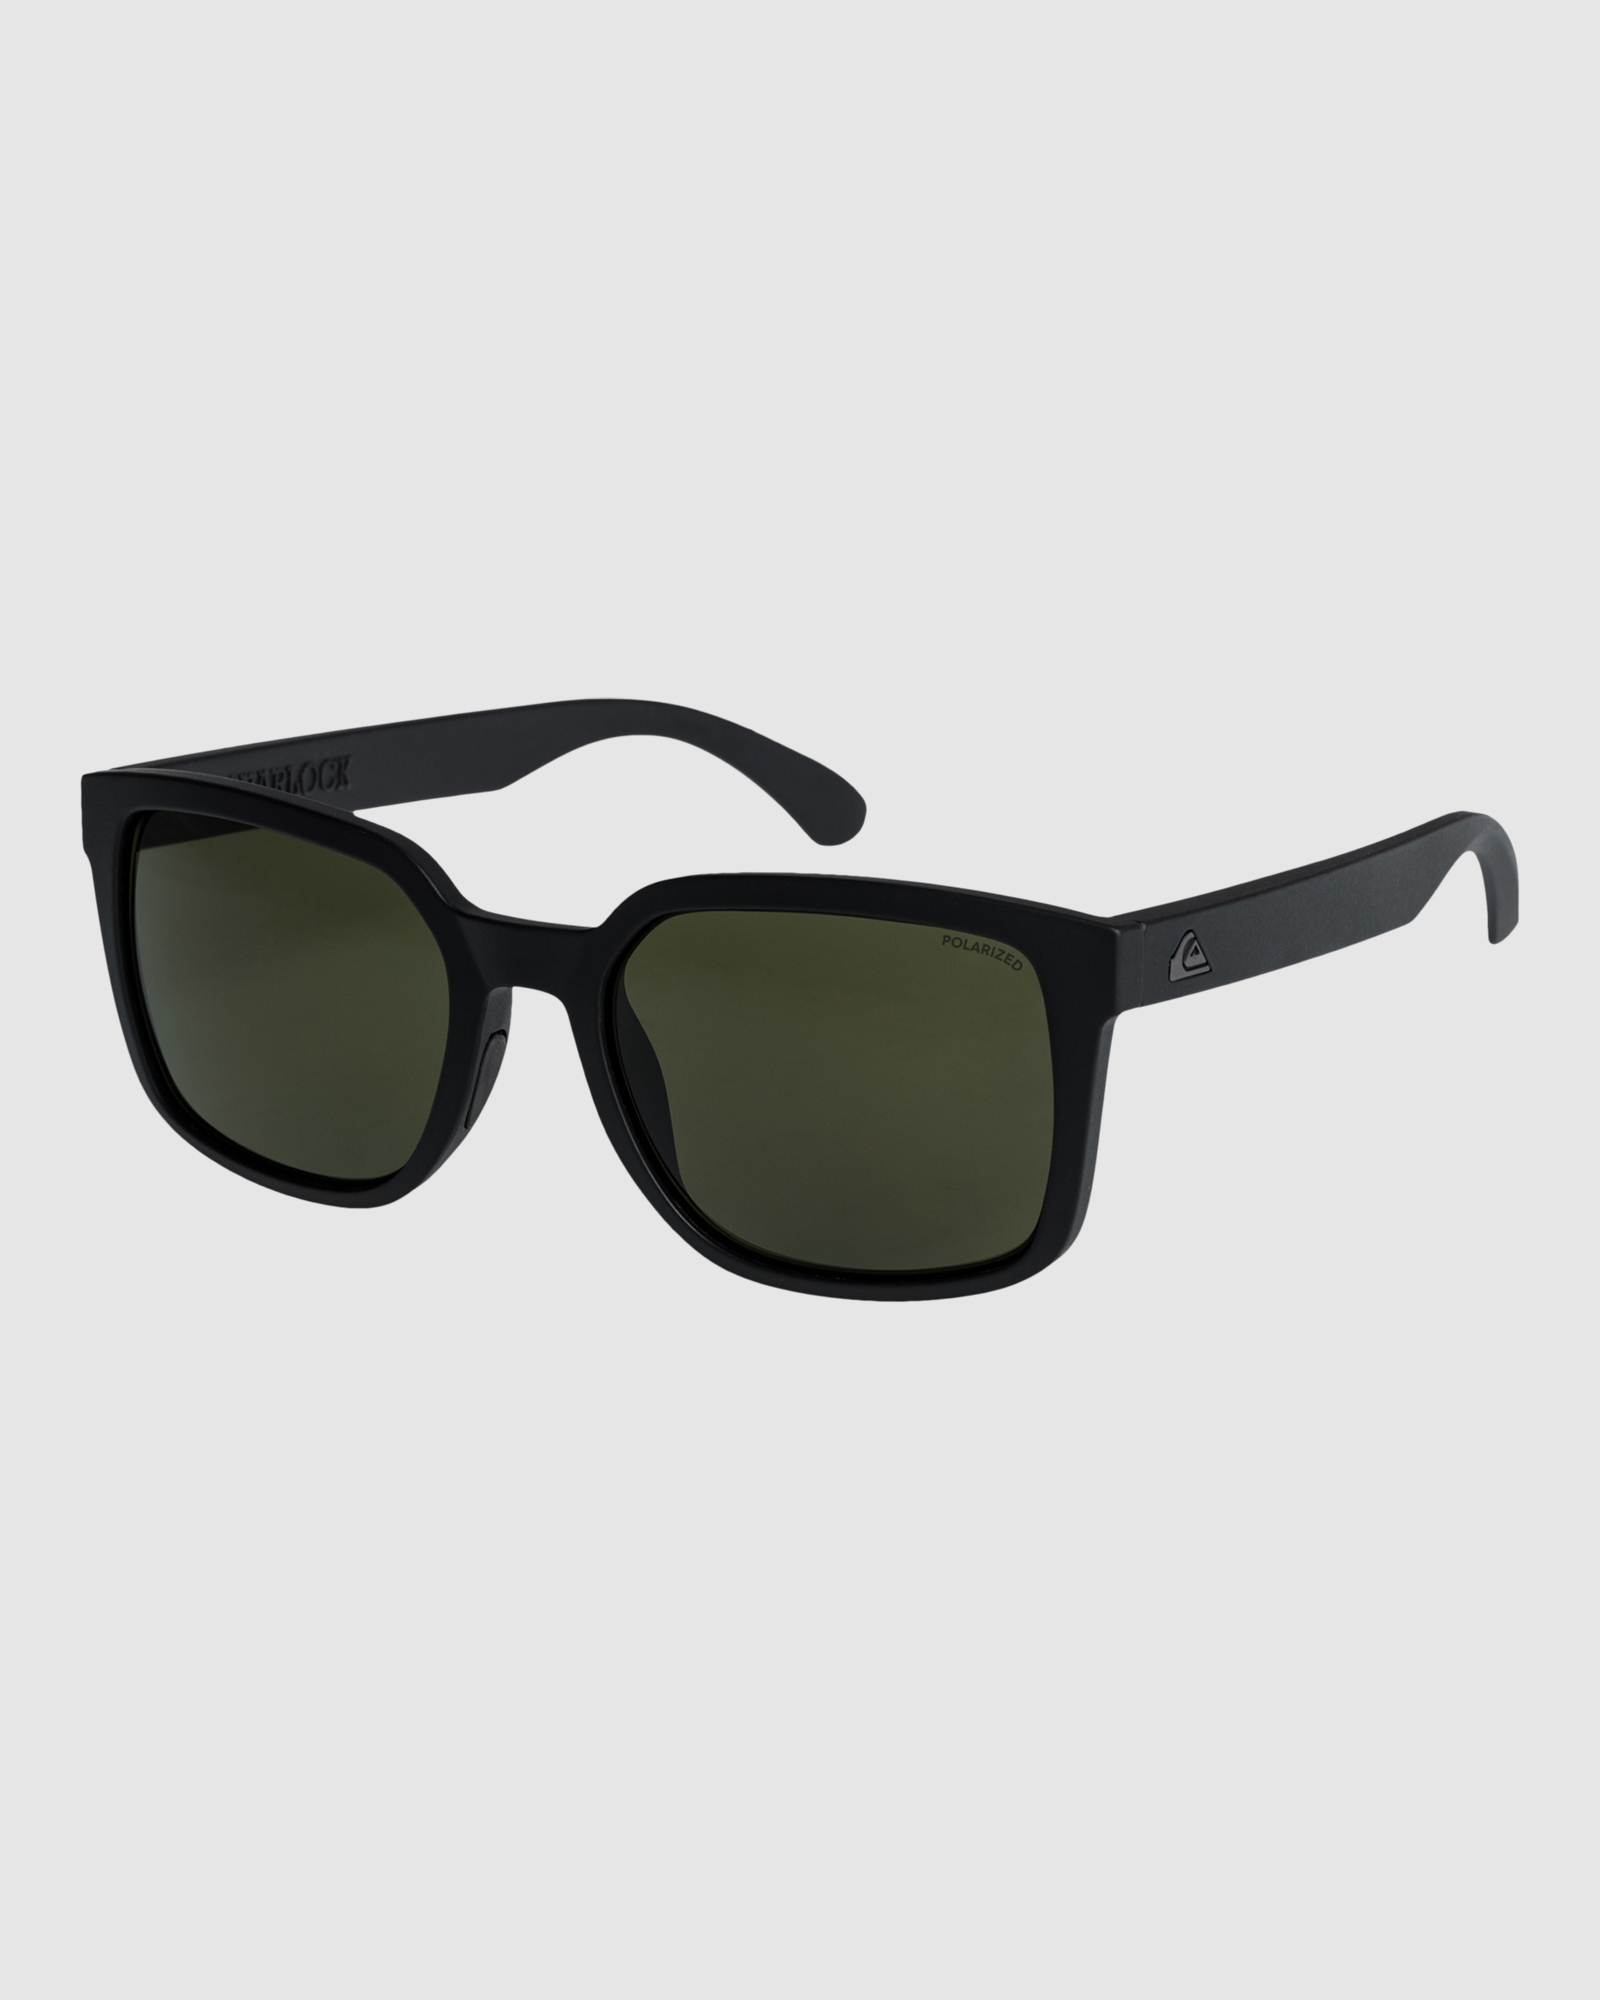 Quiksilver Warlock P - Polarised Sunglasses For Men - Black Green Plz |  SurfStitch